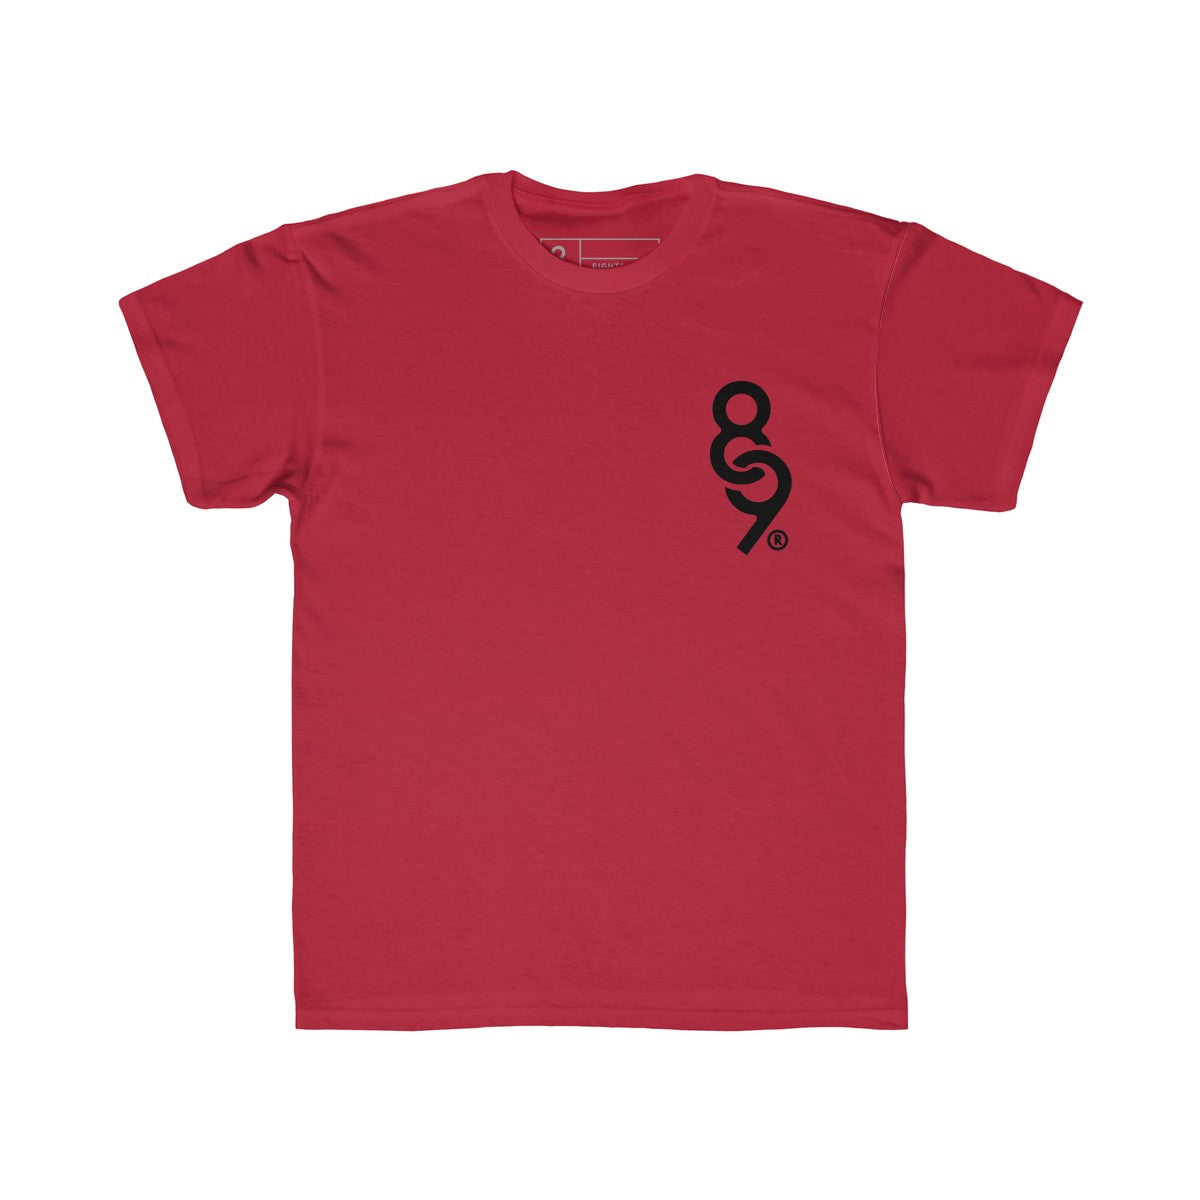 Keys T-Shirt Red & Black T-Shirt Youth Quickstrike